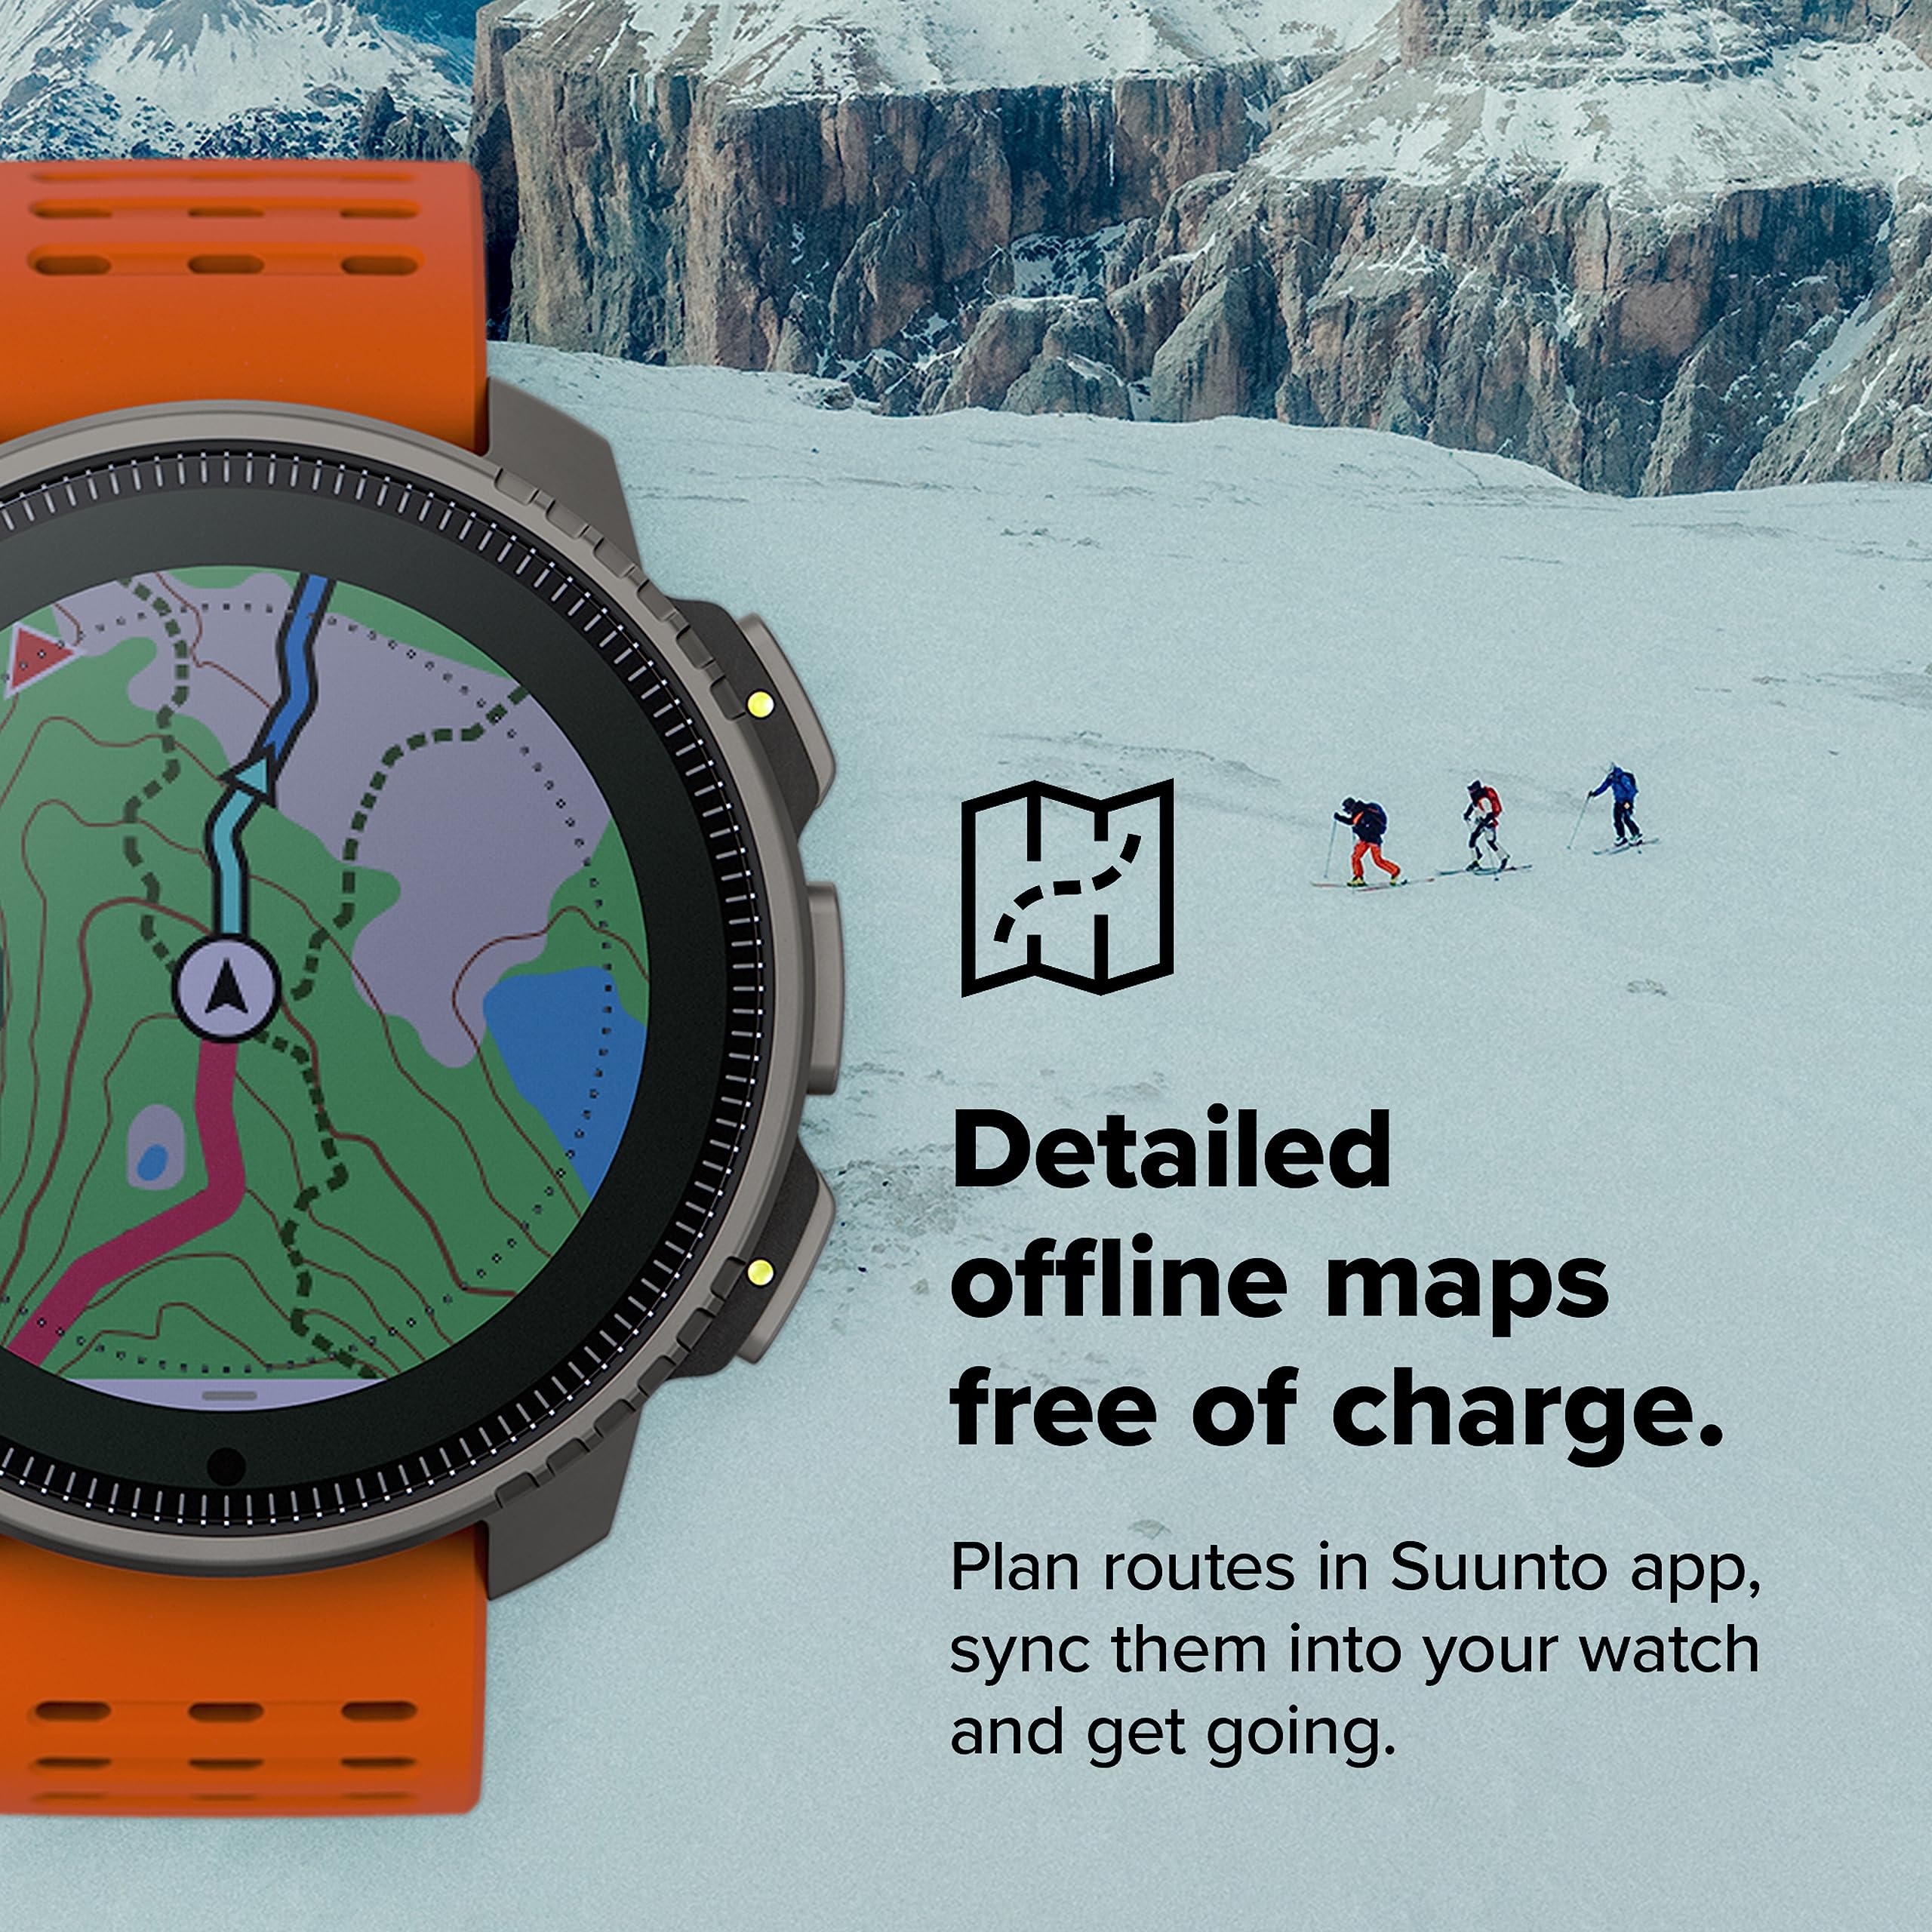 SUUNTO Vertical: Adventure GPS Watch, Large Screen, Offline Maps, Solar Charging